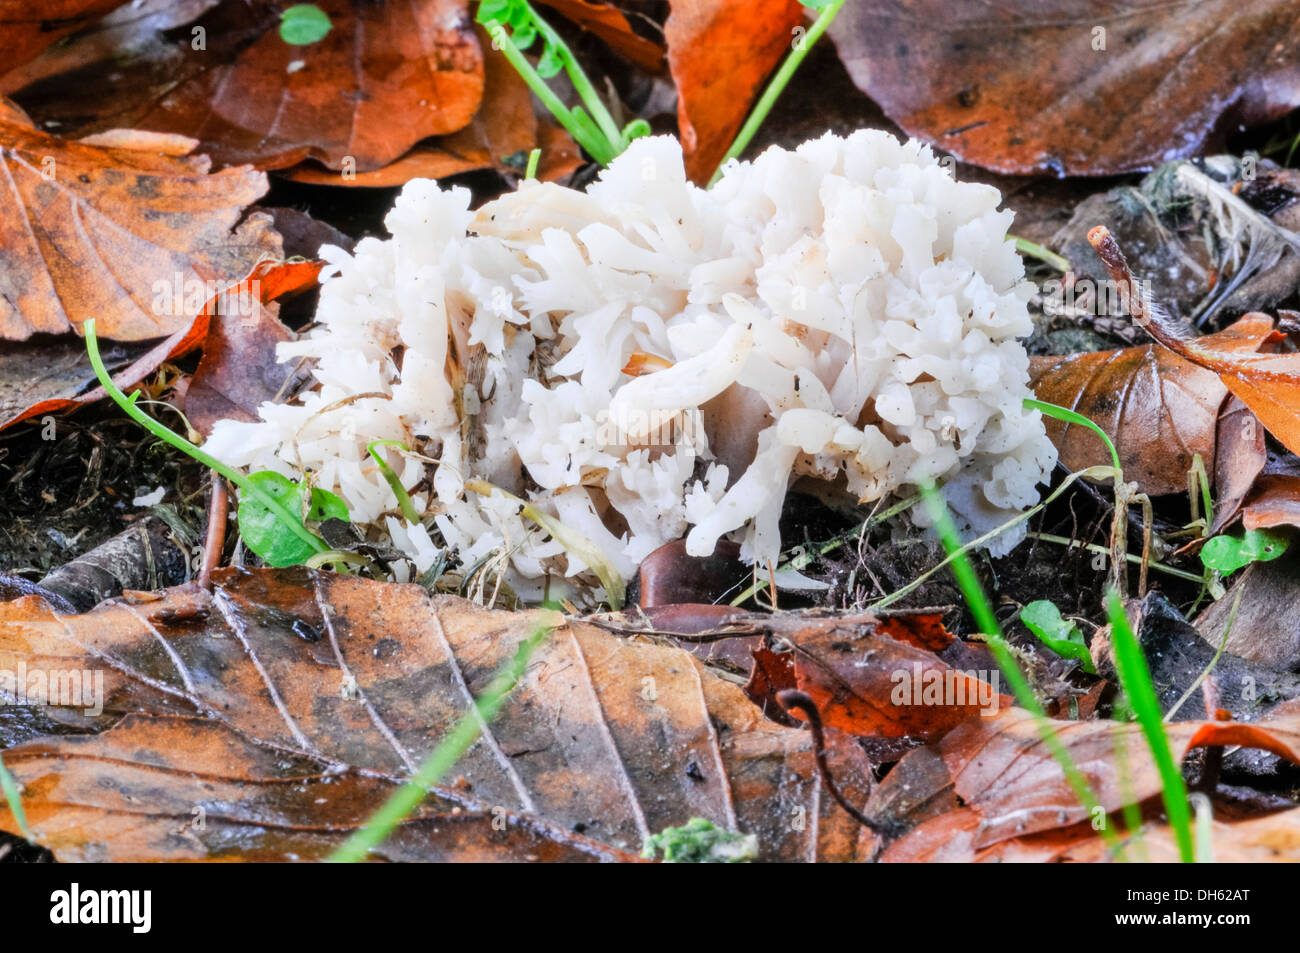 Wood cauliflower (Sparassis crispa) jelly fungus growing among leaf litter Stock Photo